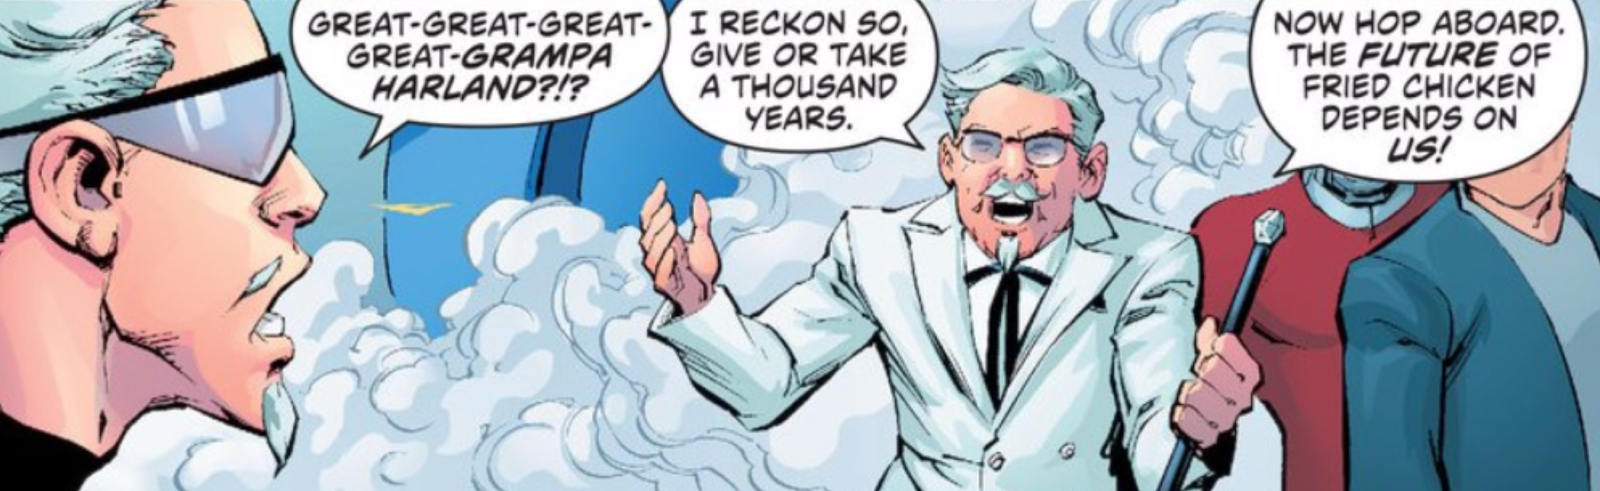 DC’s New KFC Comic Turns Colonel Sanders Into Fried Chicken Jesus